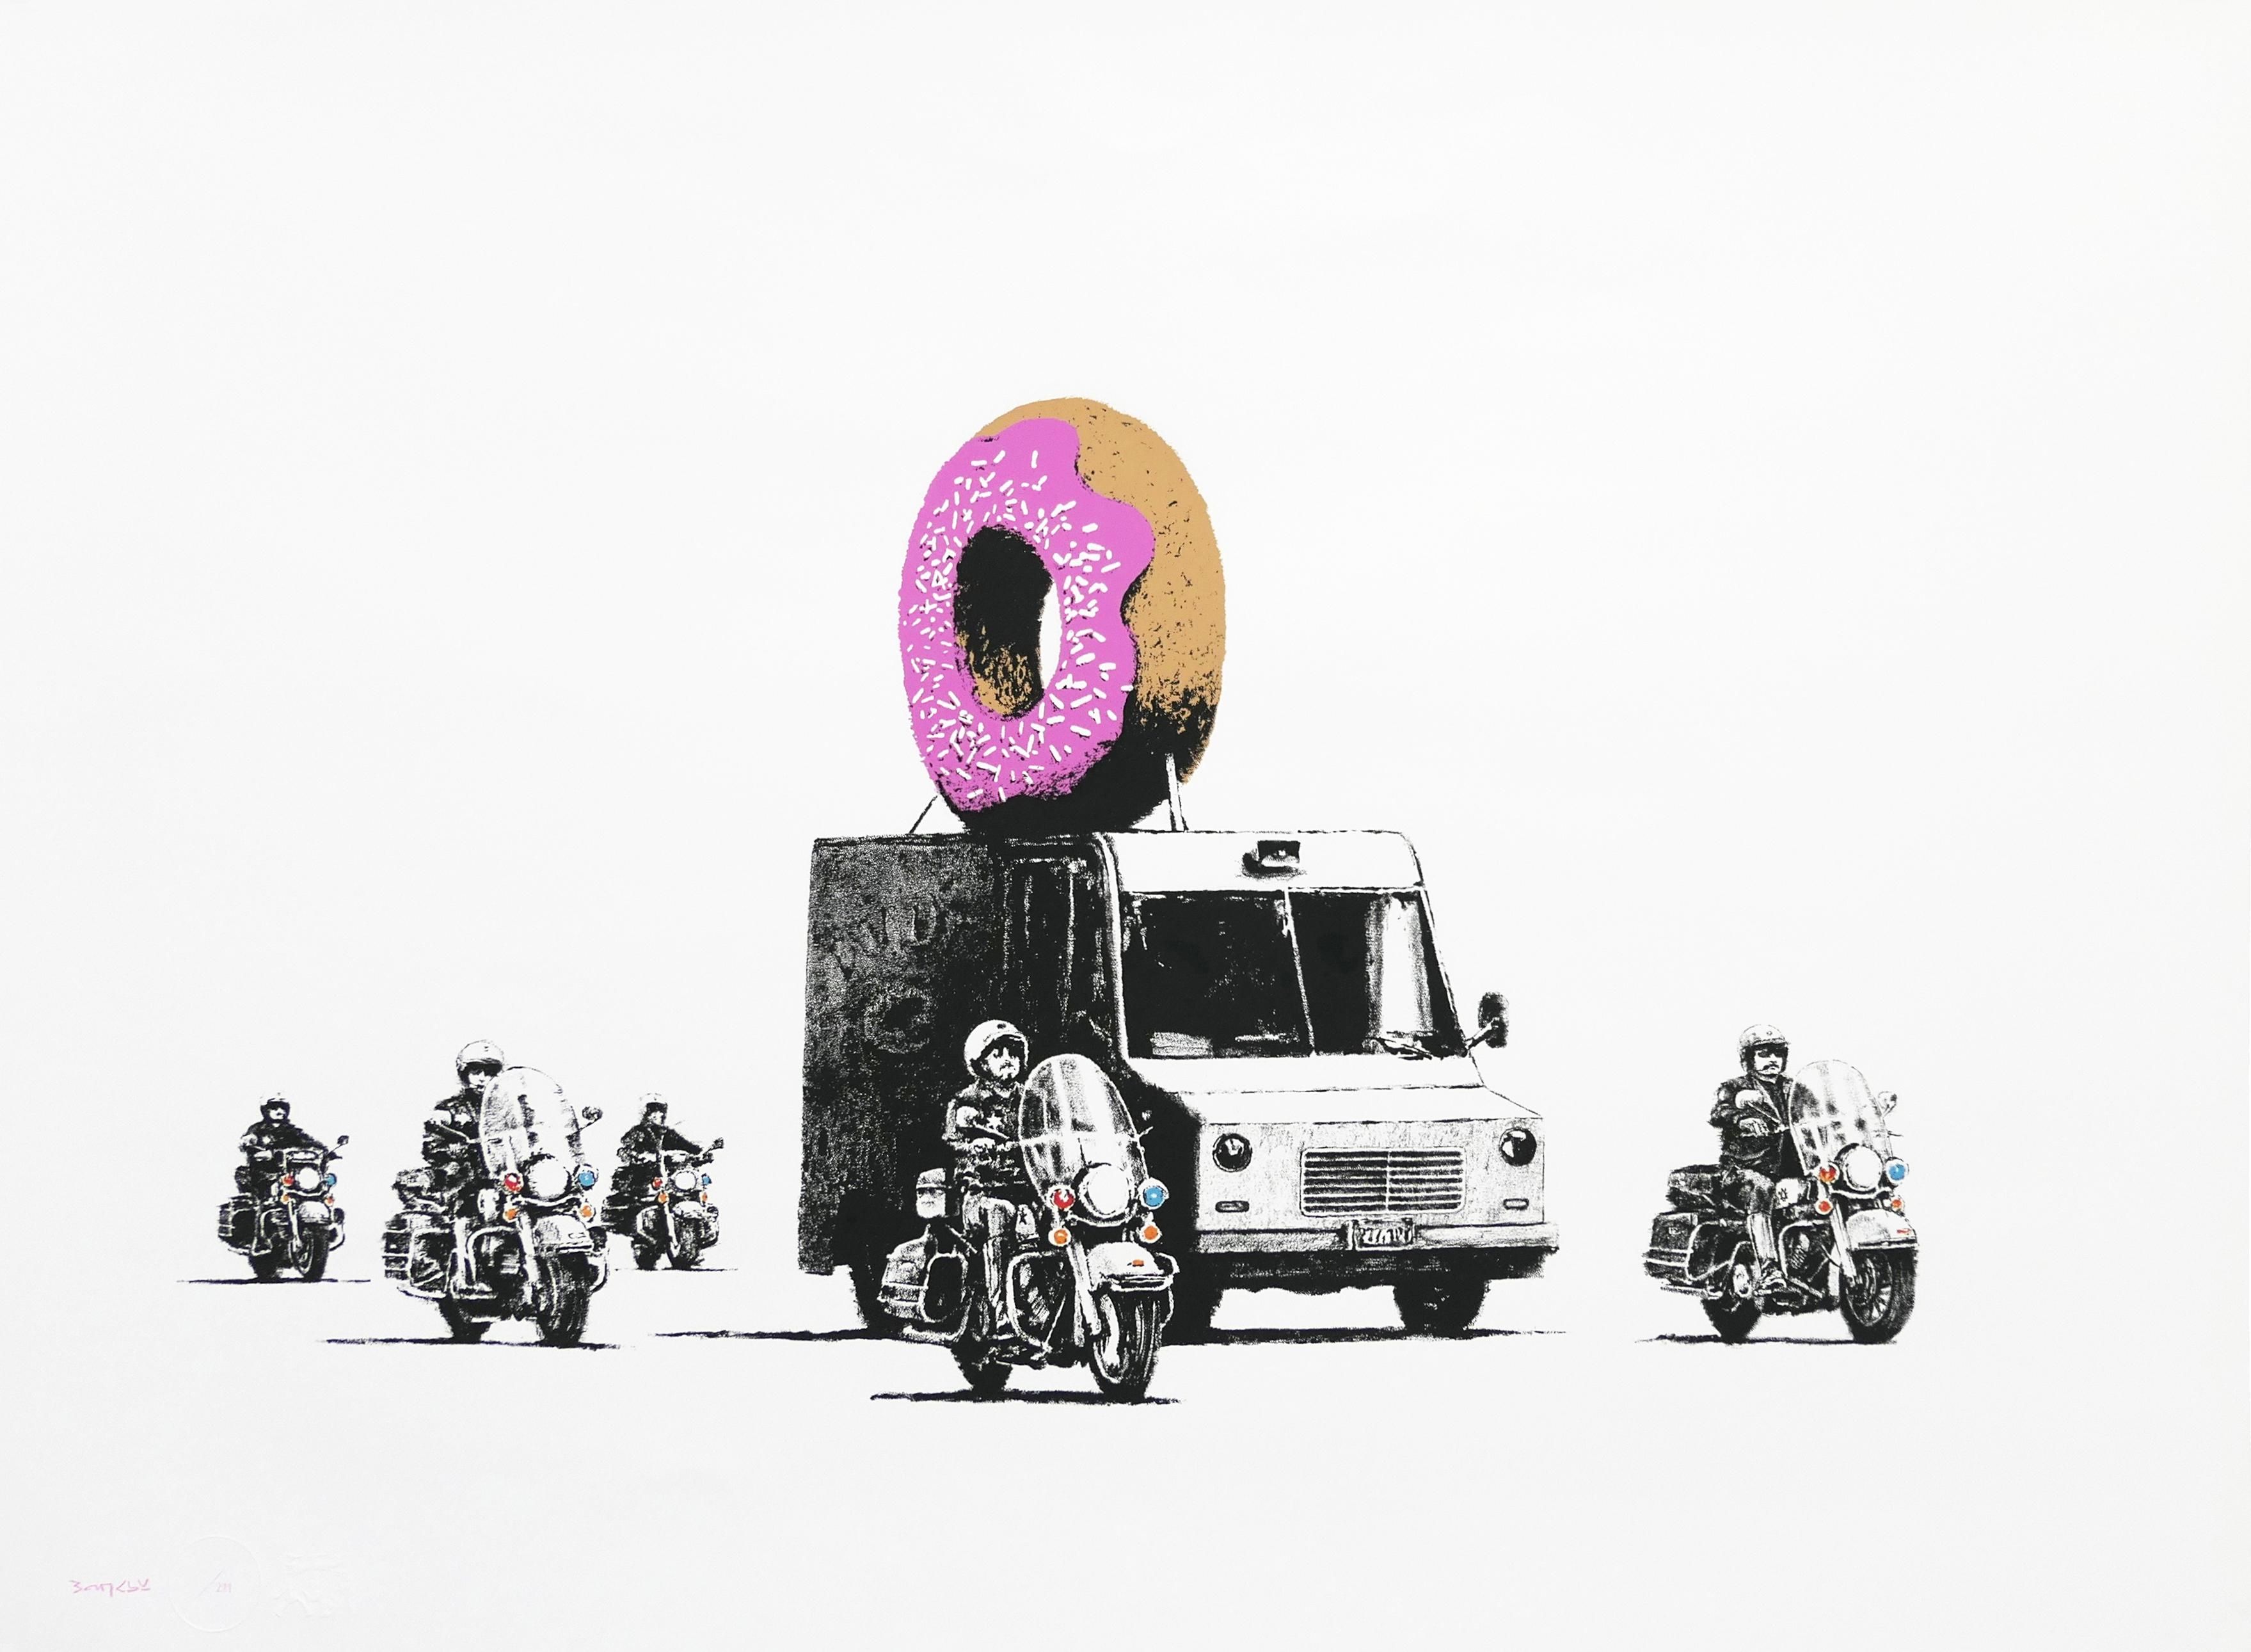 Donuts by Banksy Background & Meaning - MyArtBroker